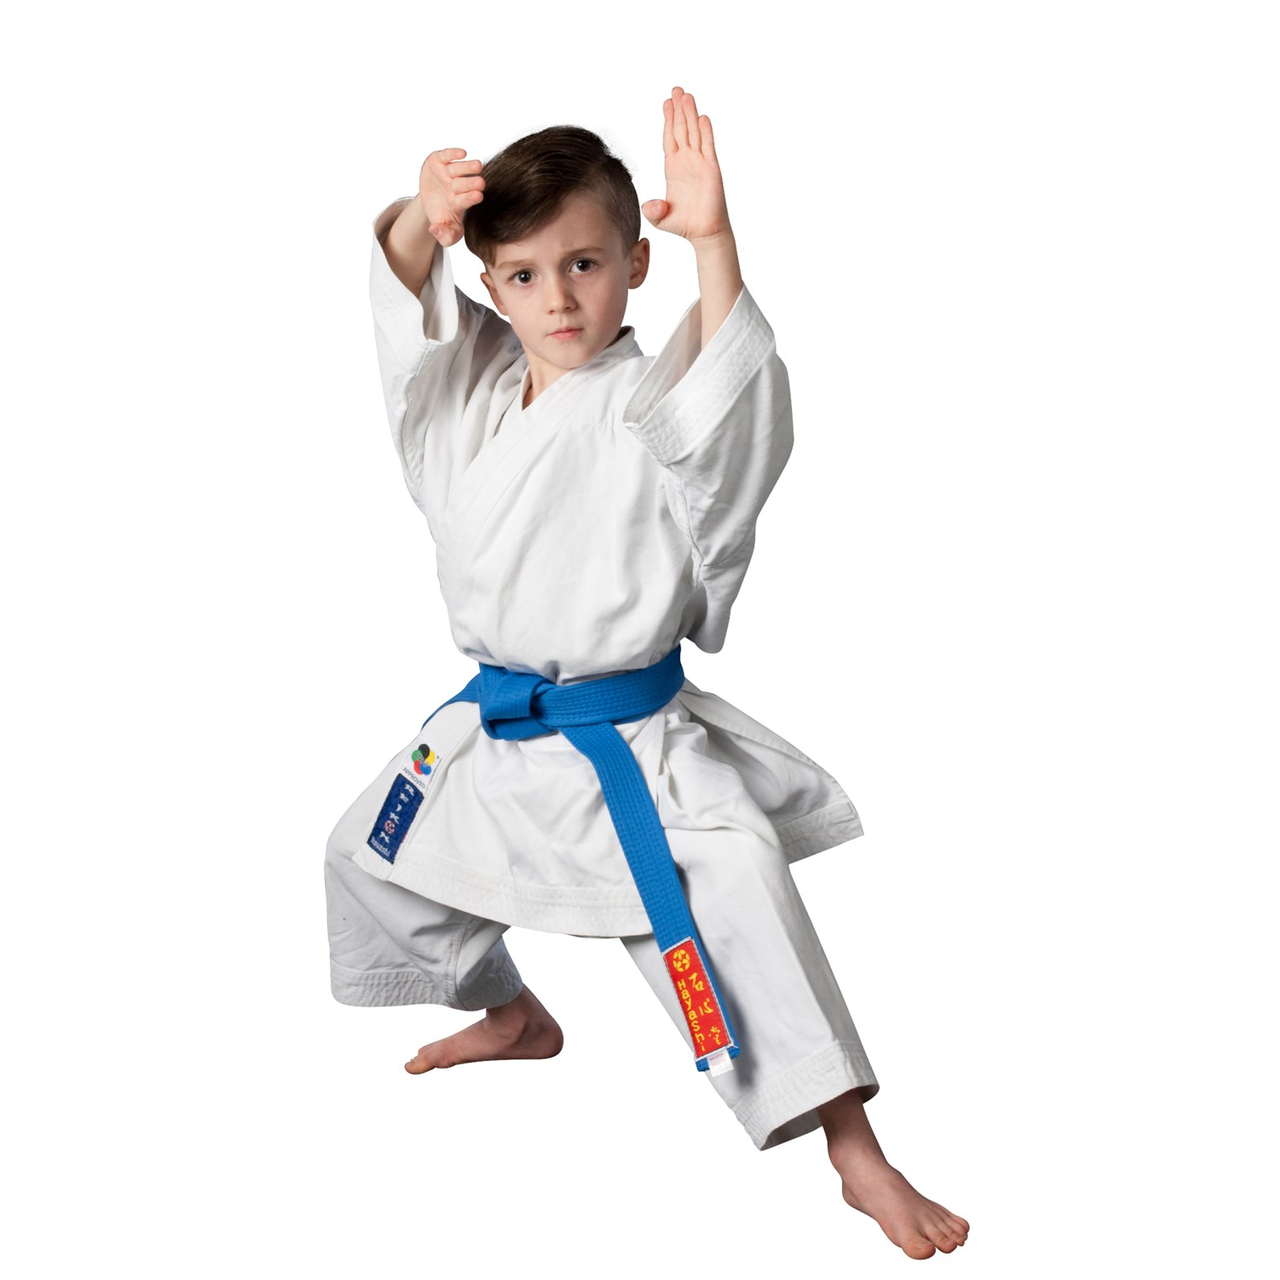 Onderling verbinden Verleiden aflevering karate kids ninja | Arlington Community Education